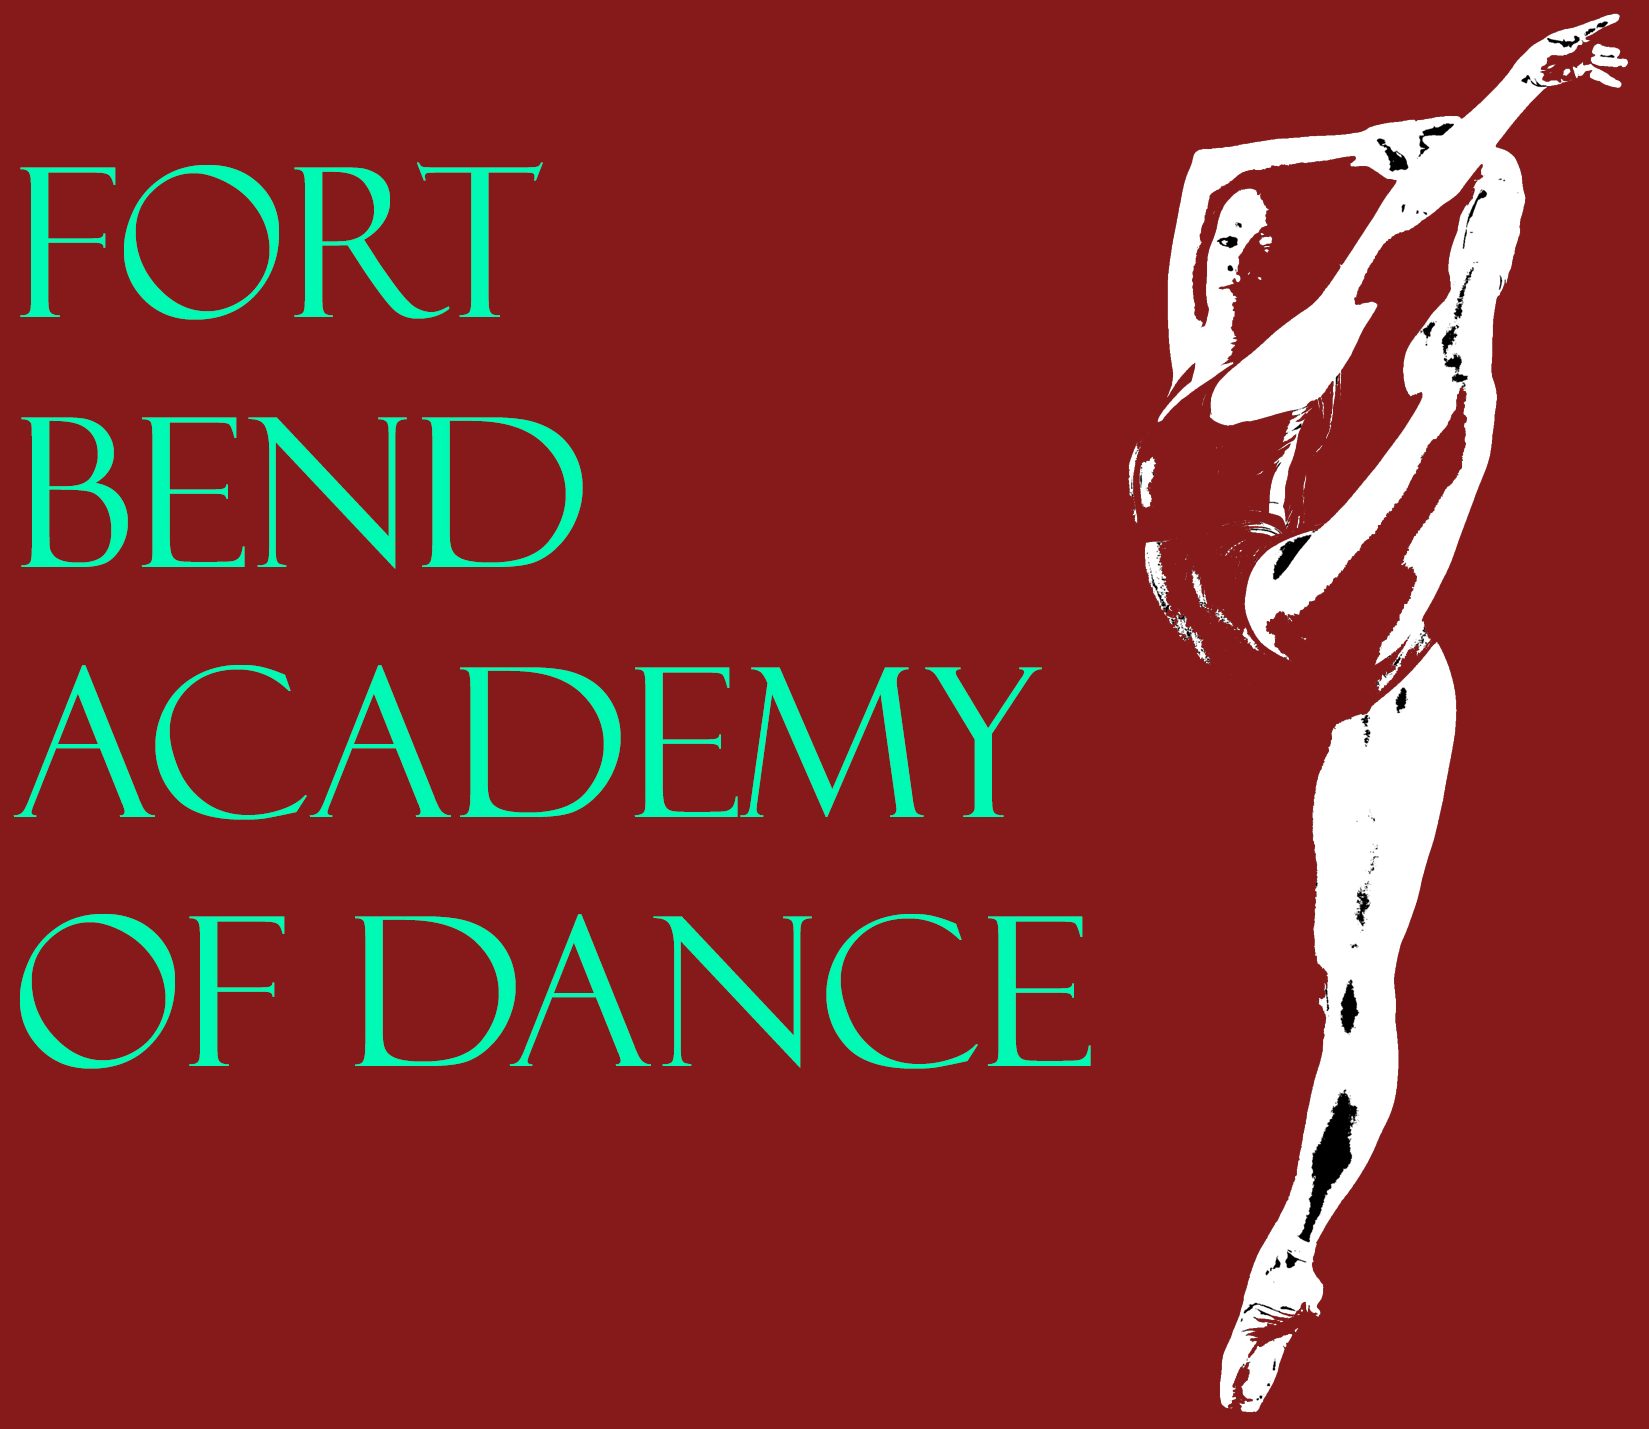 Fort Bend Academy of Dance